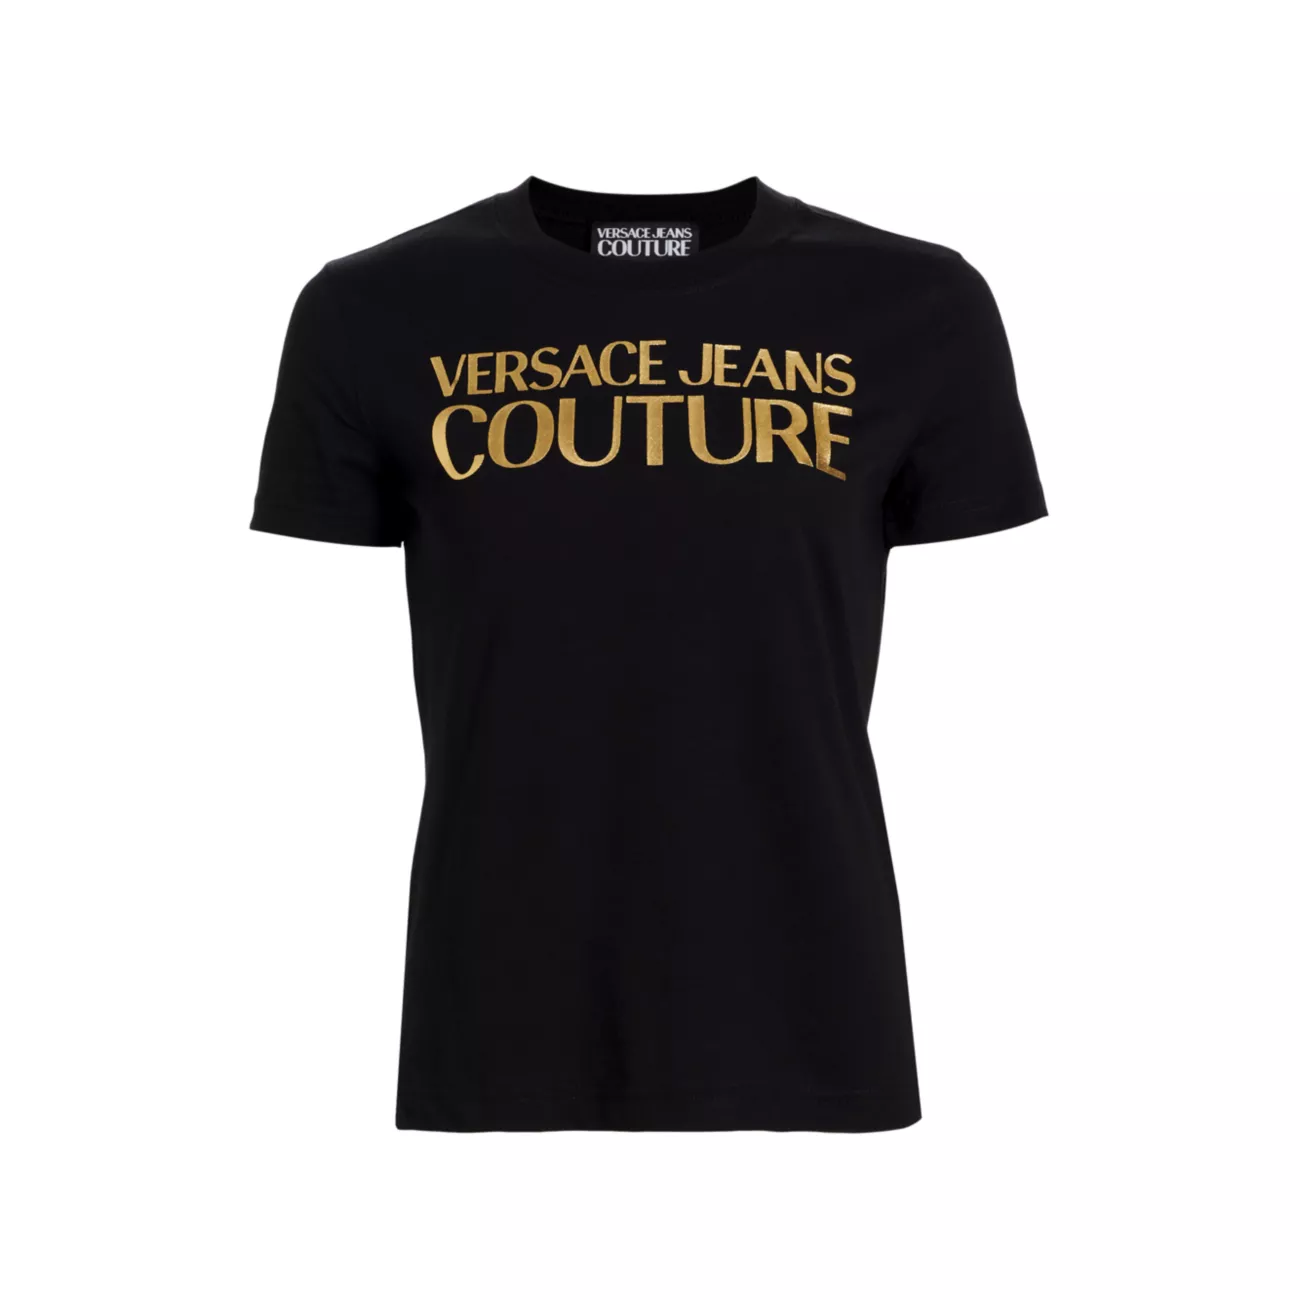 Футболка с логотипом организации Versace Jeans Couture